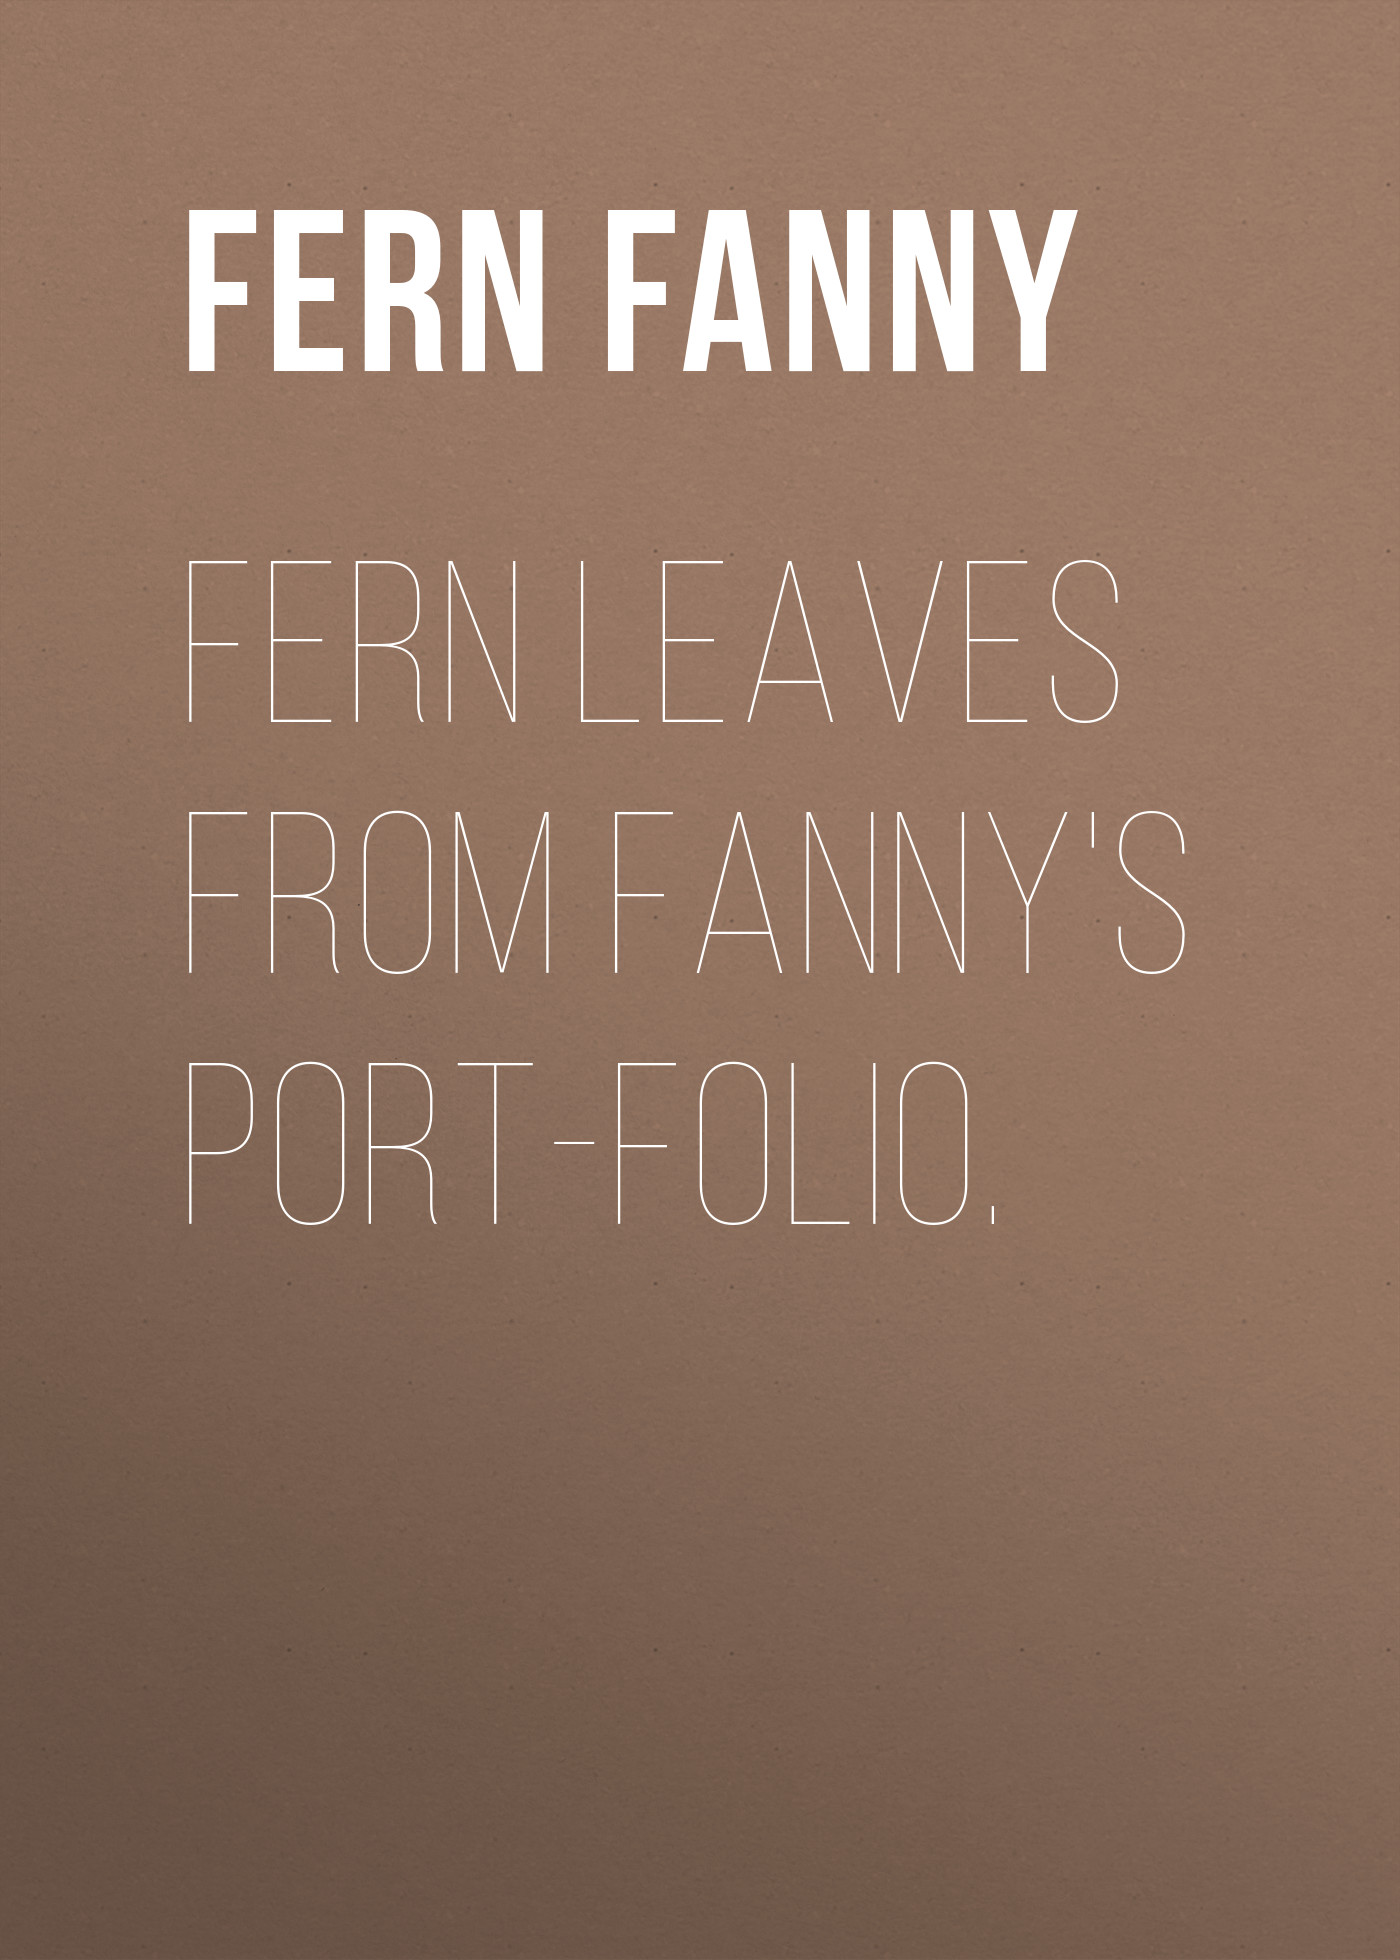 Fern Leaves from Fanny's Port-folio.